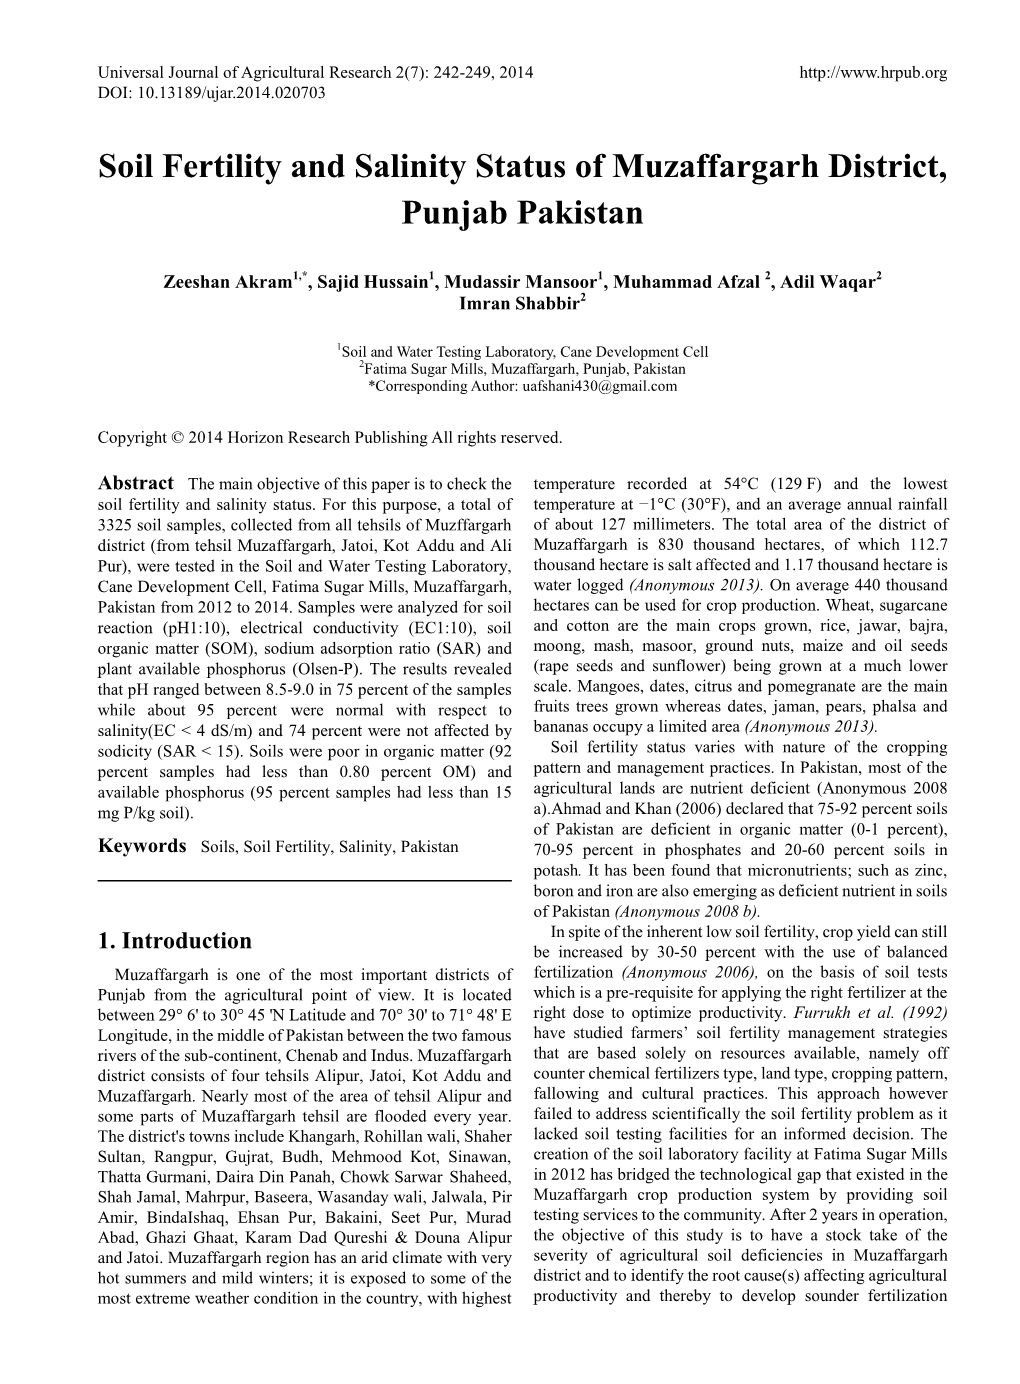 Soil Fertility and Salinity Status of Muzaffargarh District, Punjab Pakistan